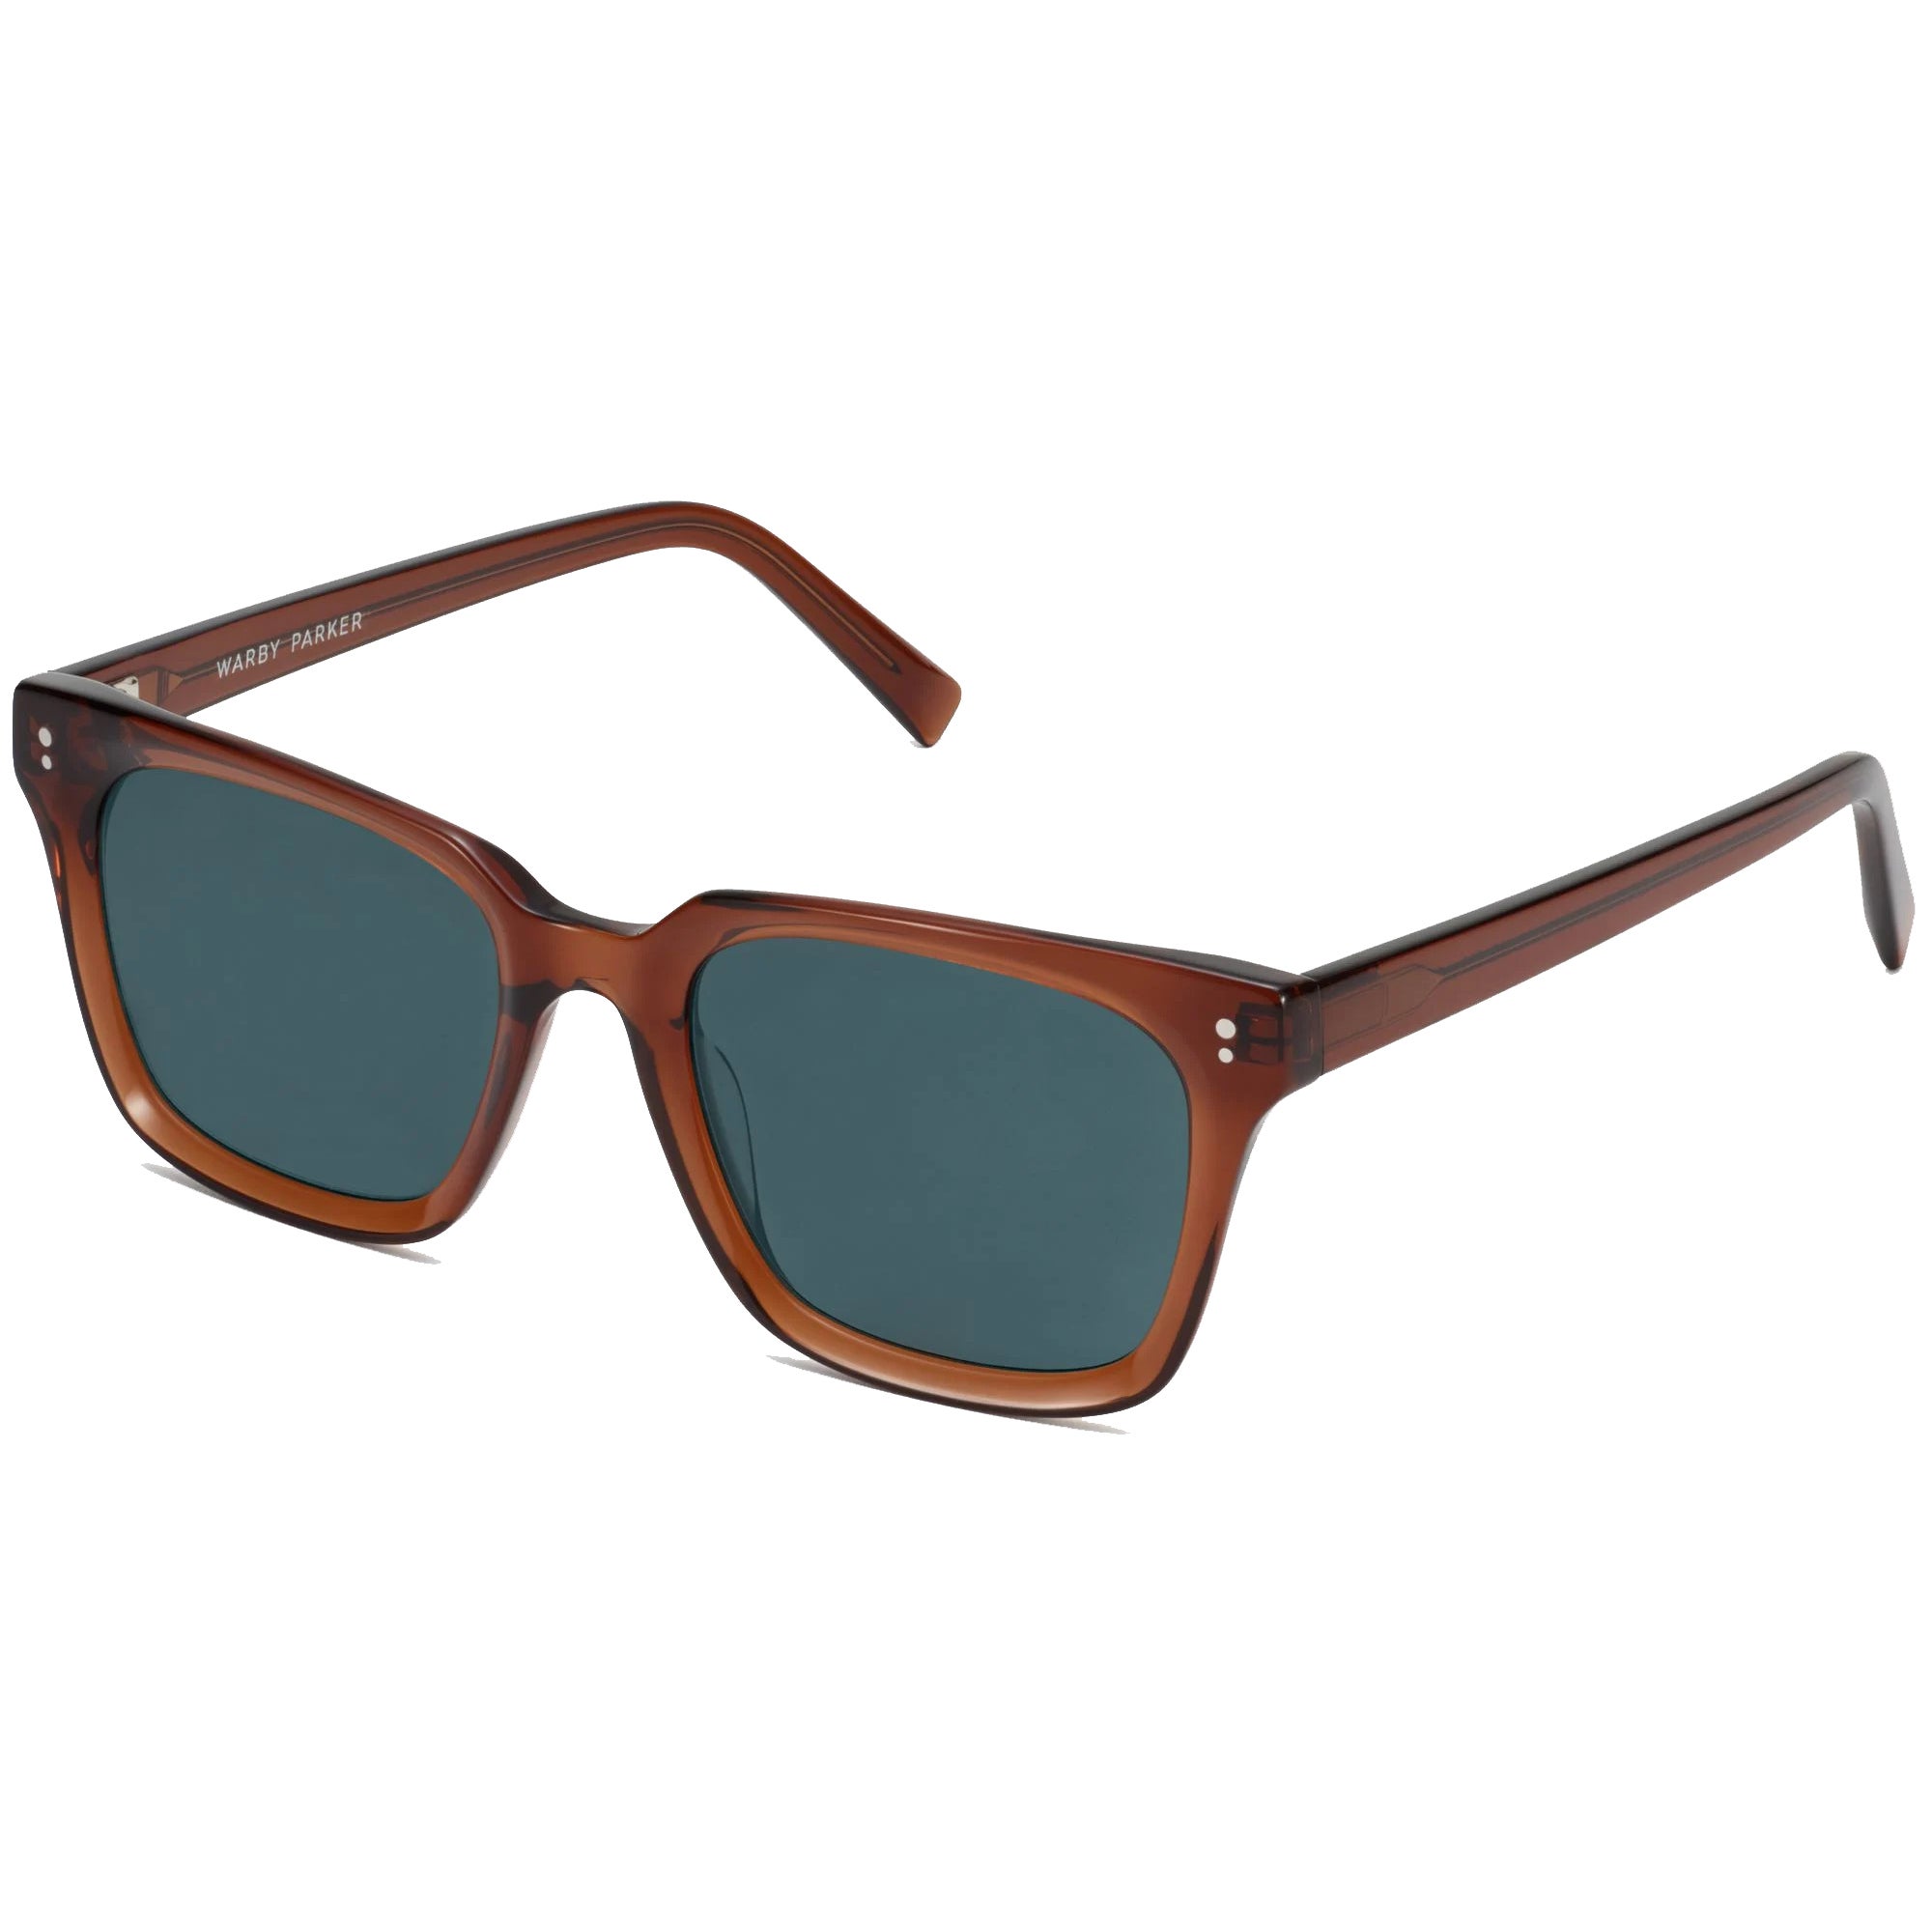 Warby Parker + Leland Sunglasses